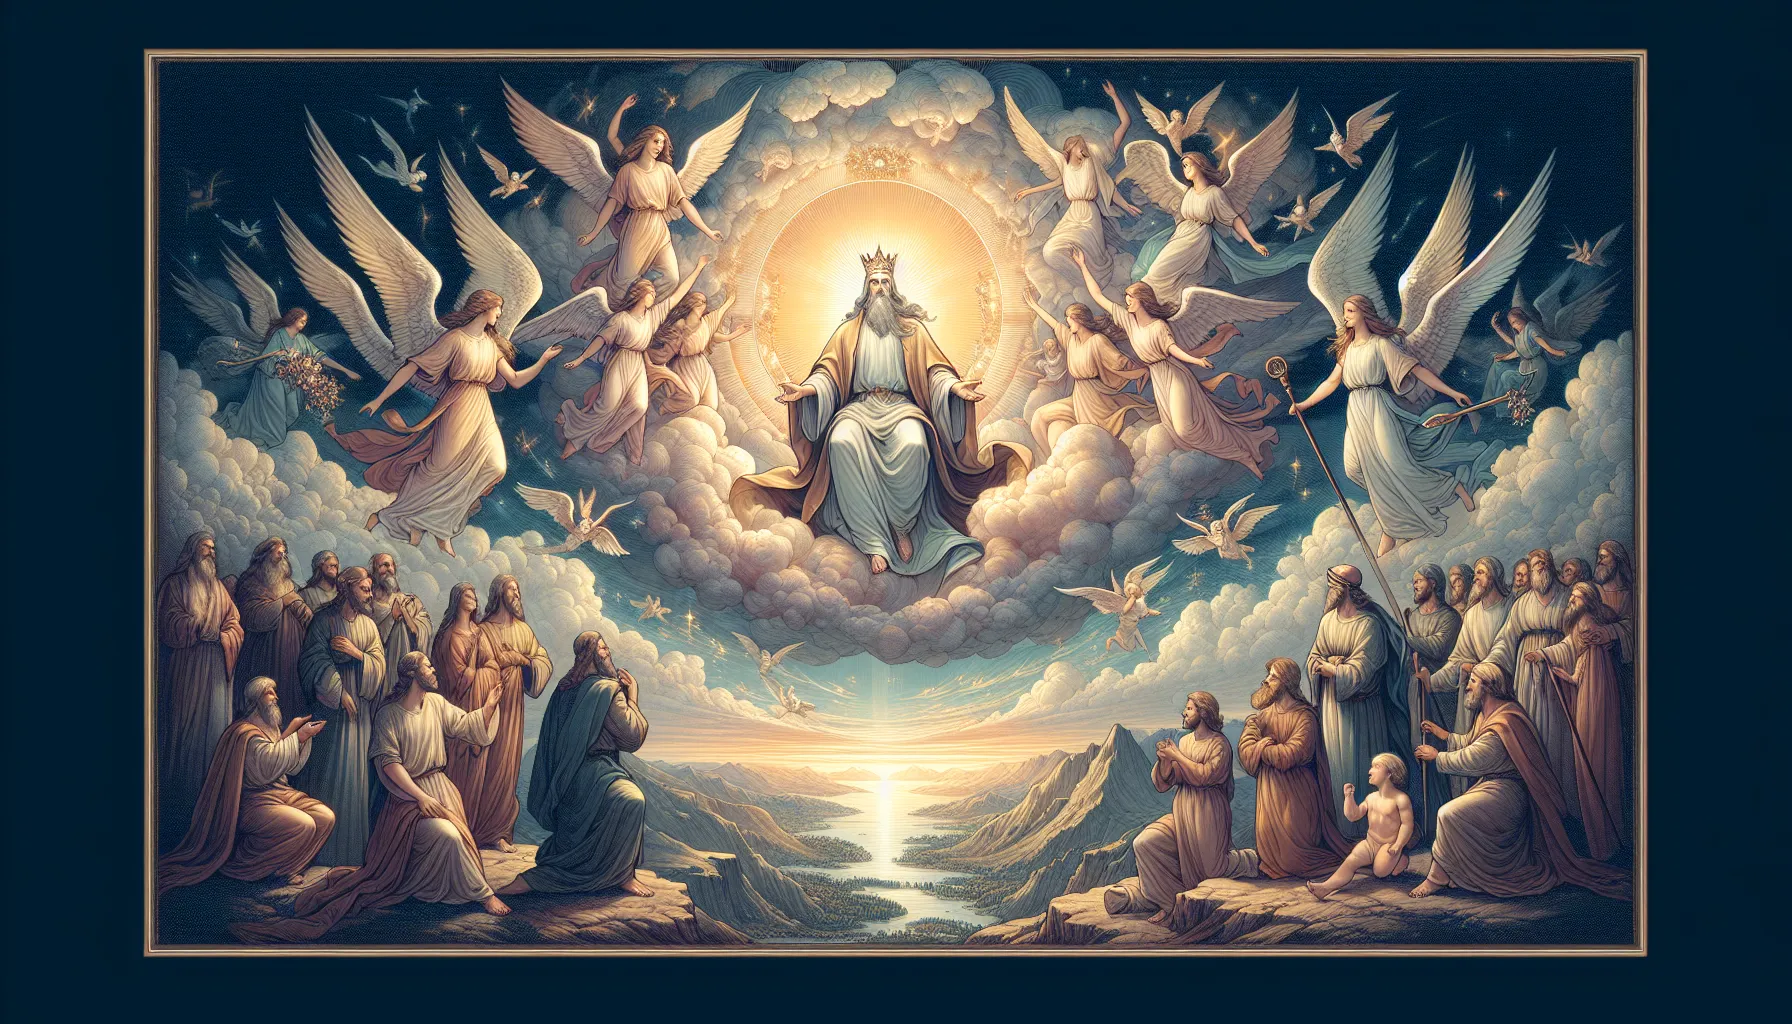 Ilustración de un paisaje celestial con Cristo como rey